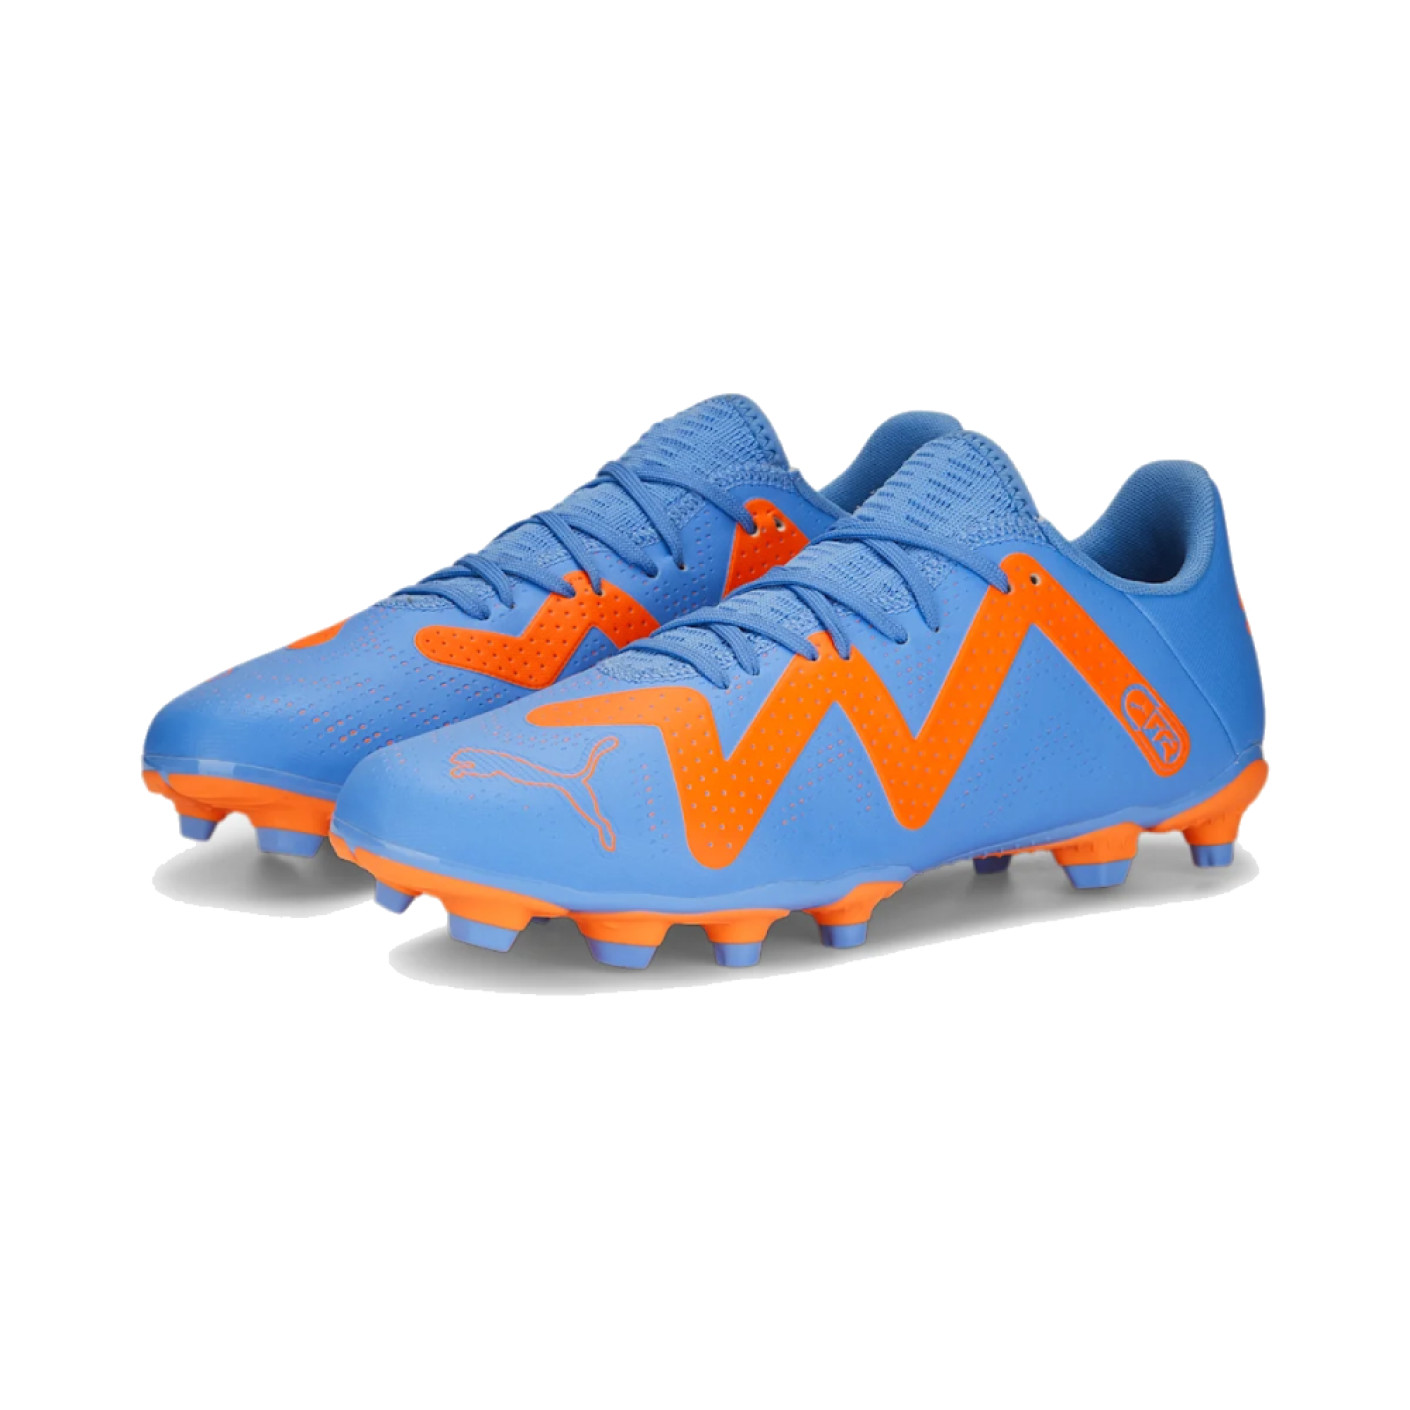 PUMA Future Play Gazon Naturel Gazon Artificiel Chaussures de Foot (MG) Bleu Orange Blanc